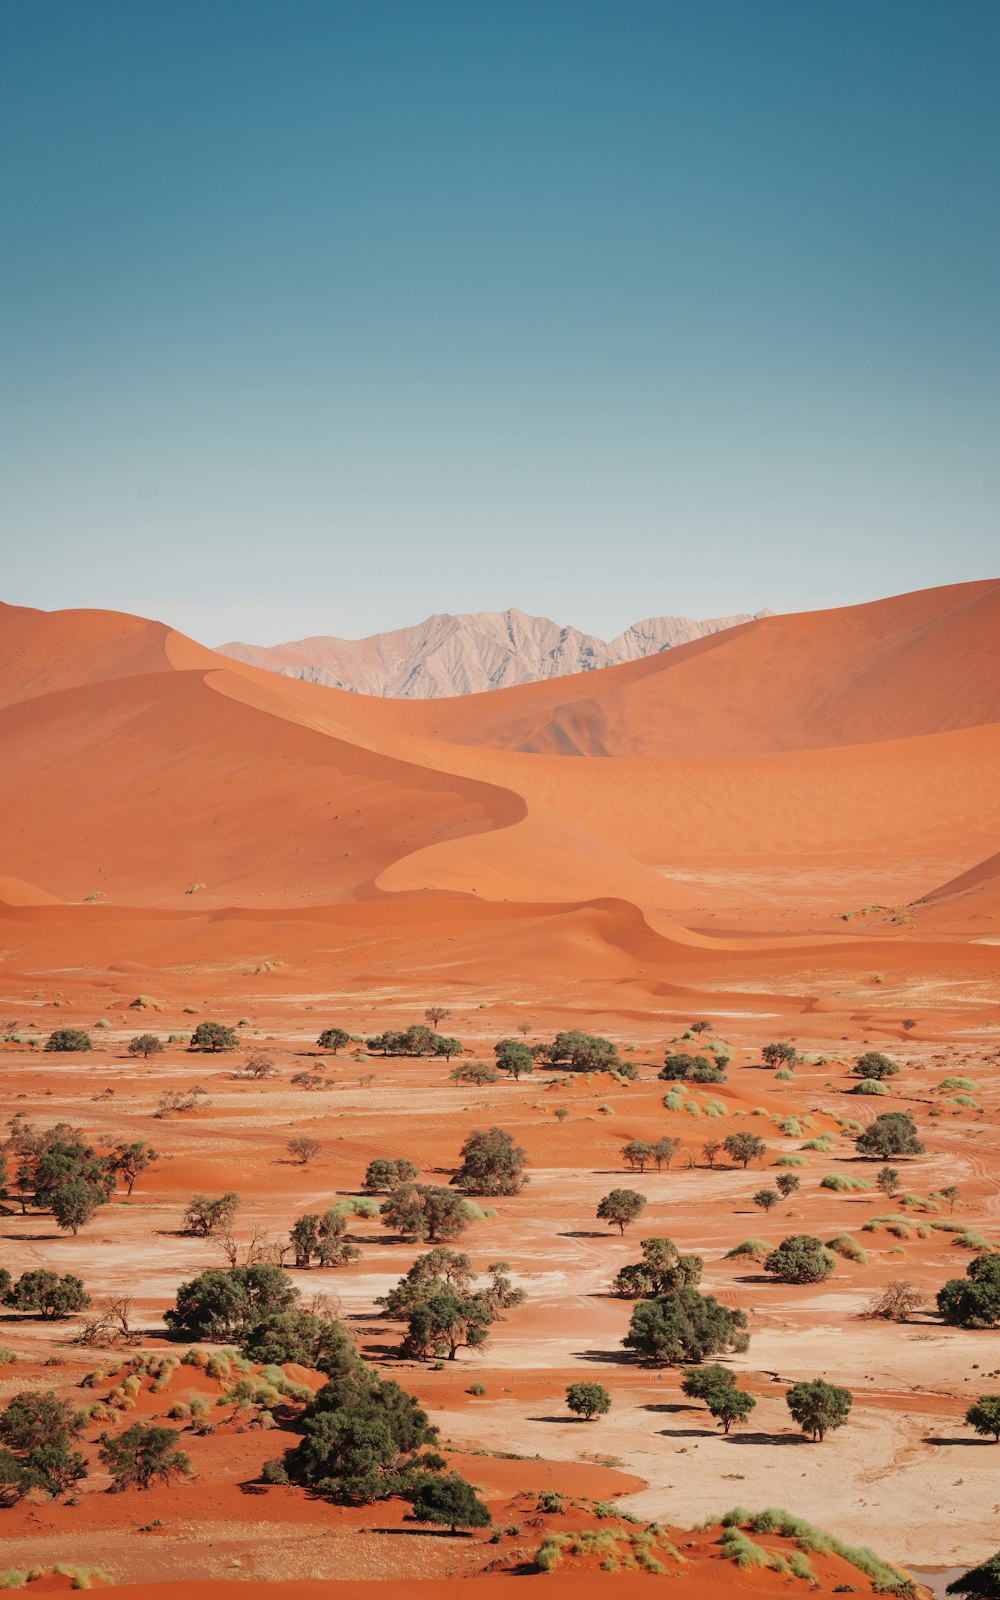 a desert landscape with sand dunes